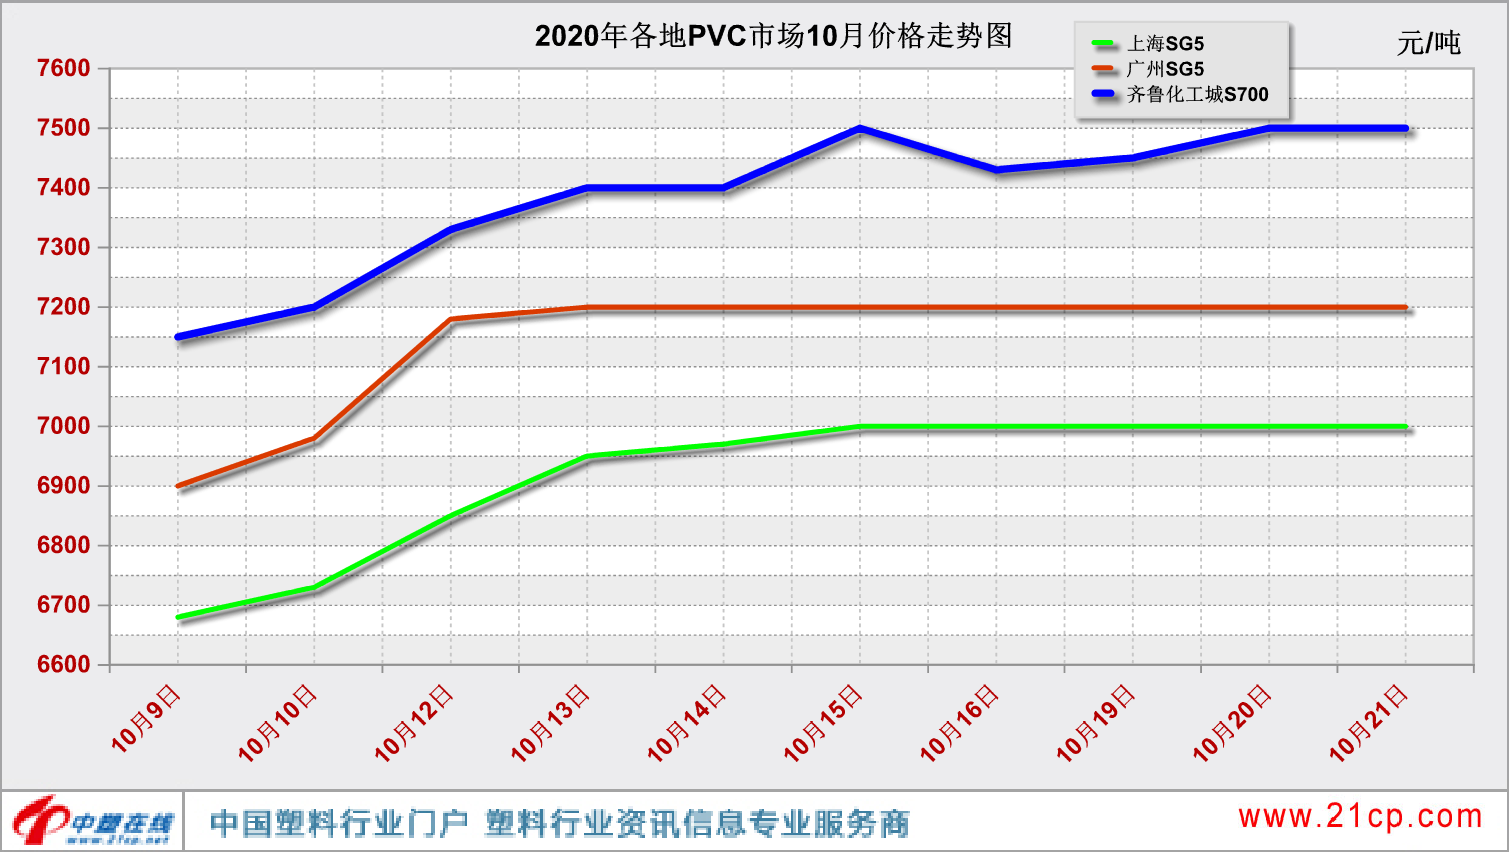 PVC供应市场紧张，后期PVC价格或将维持高位震荡